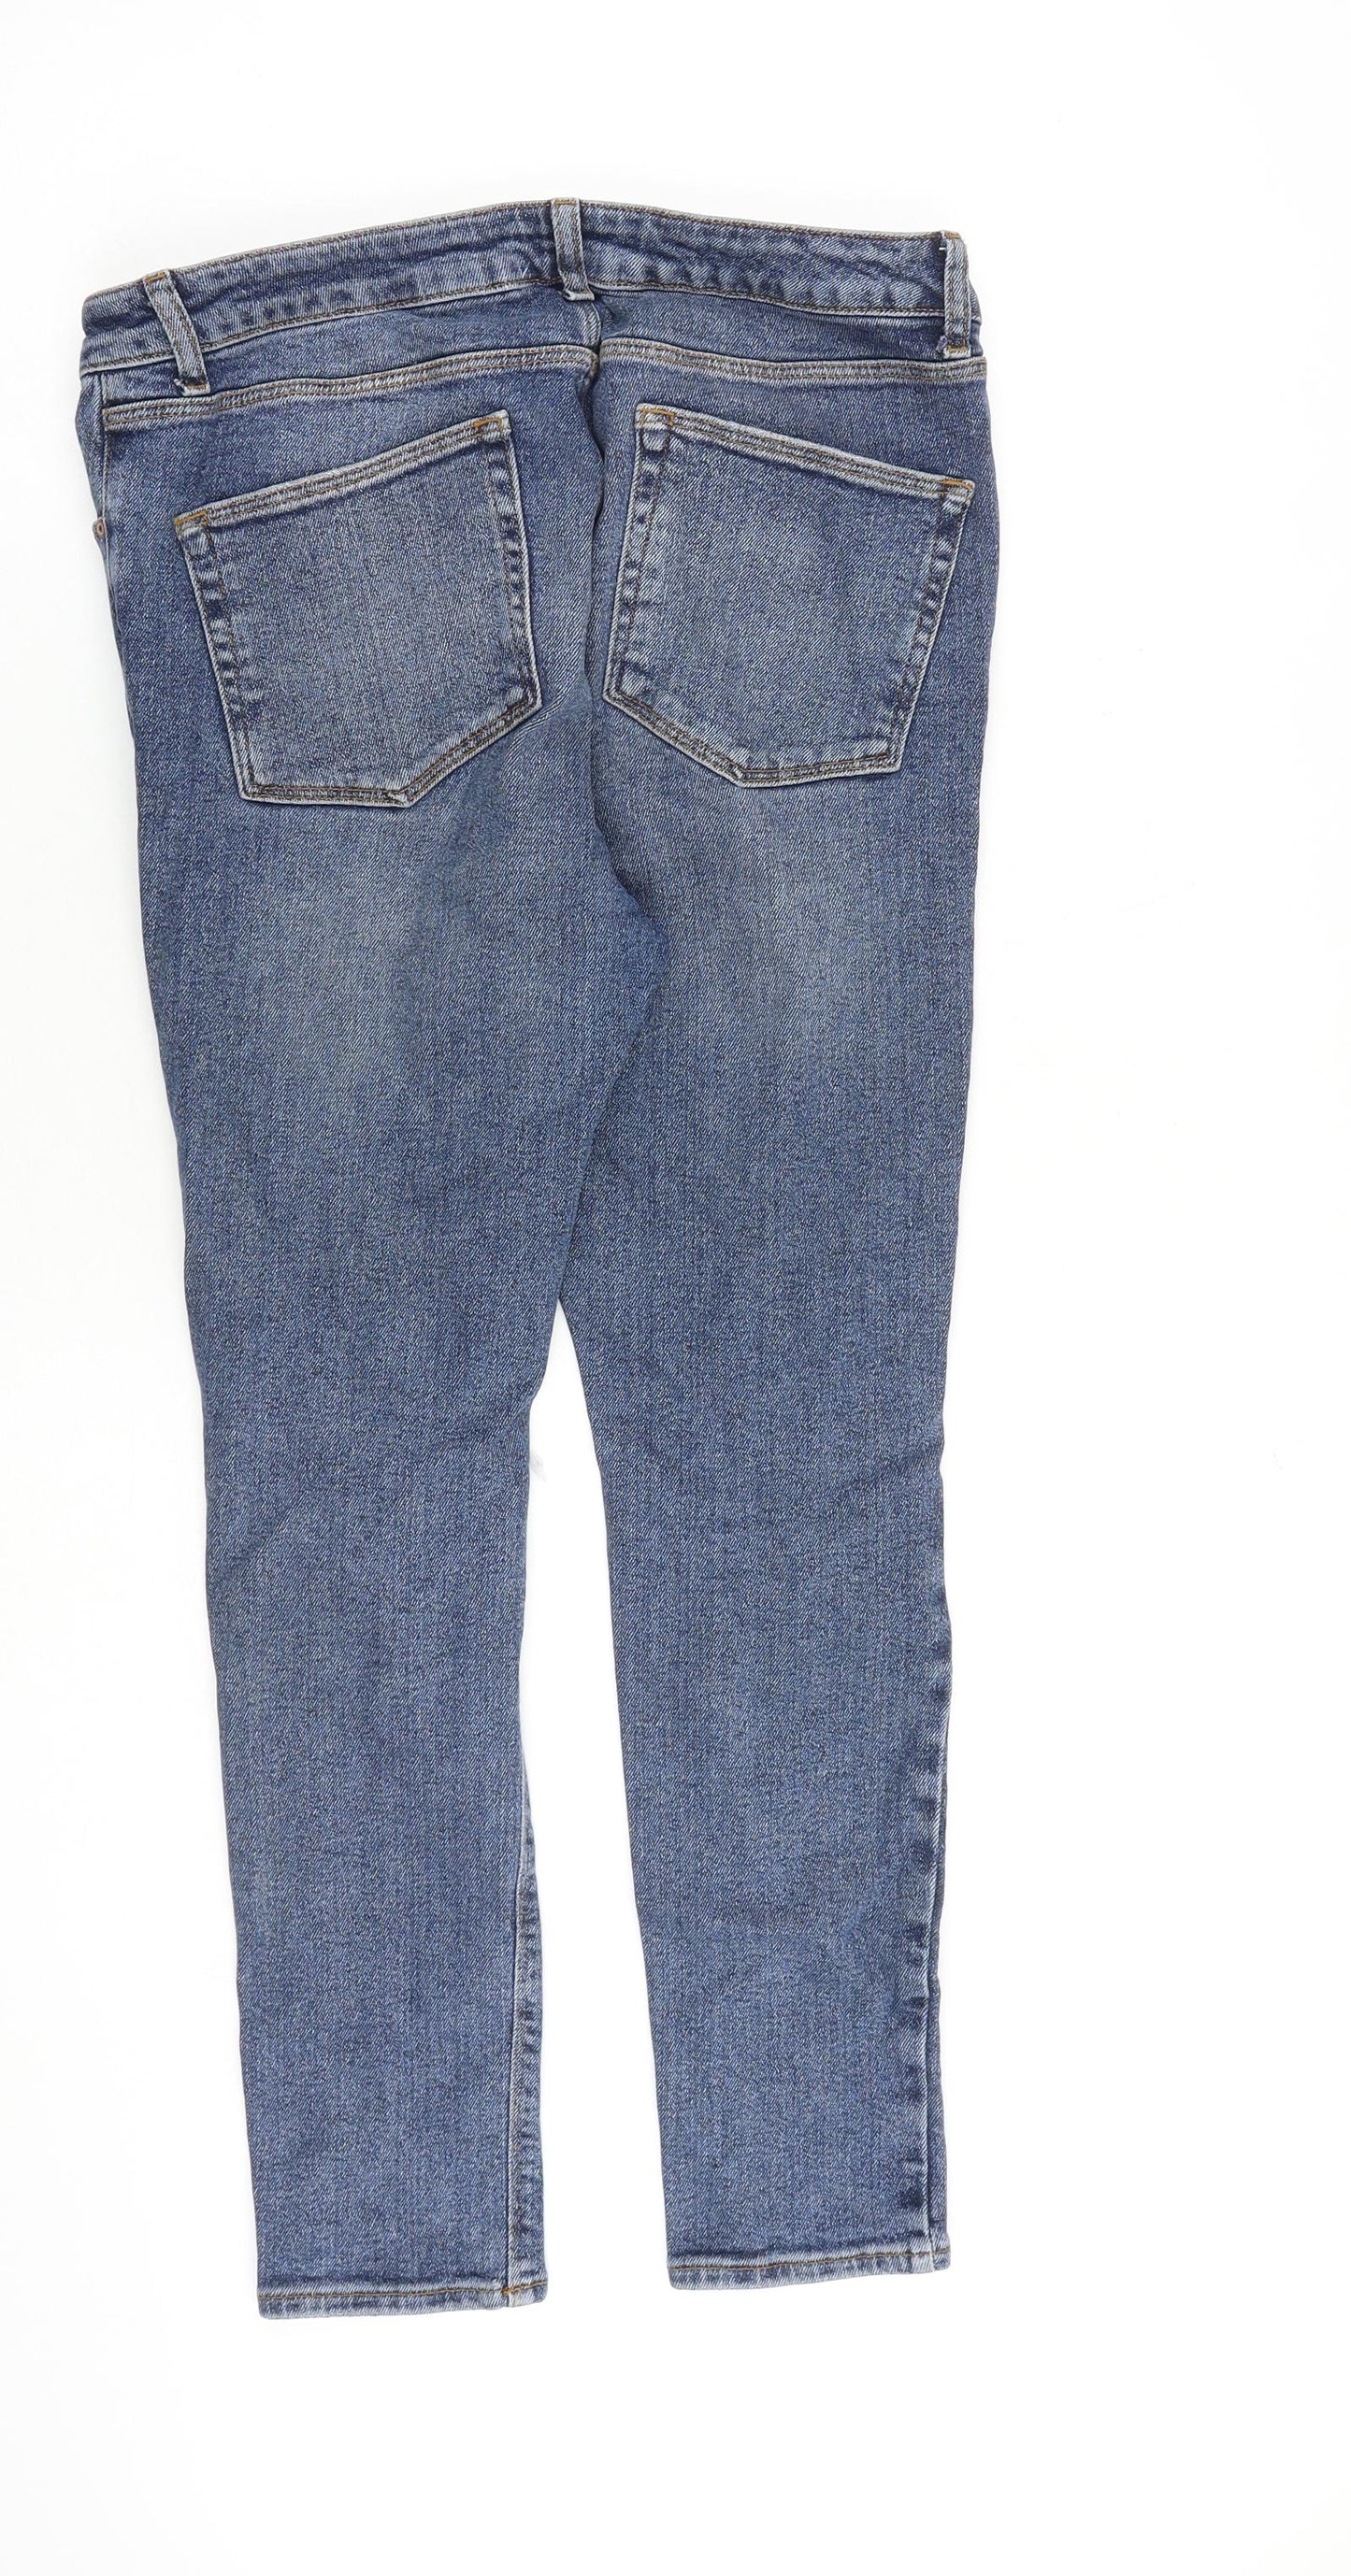 ASOS Womens Blue Cotton Skinny Jeans Size 34 in L30 in Slim Zip